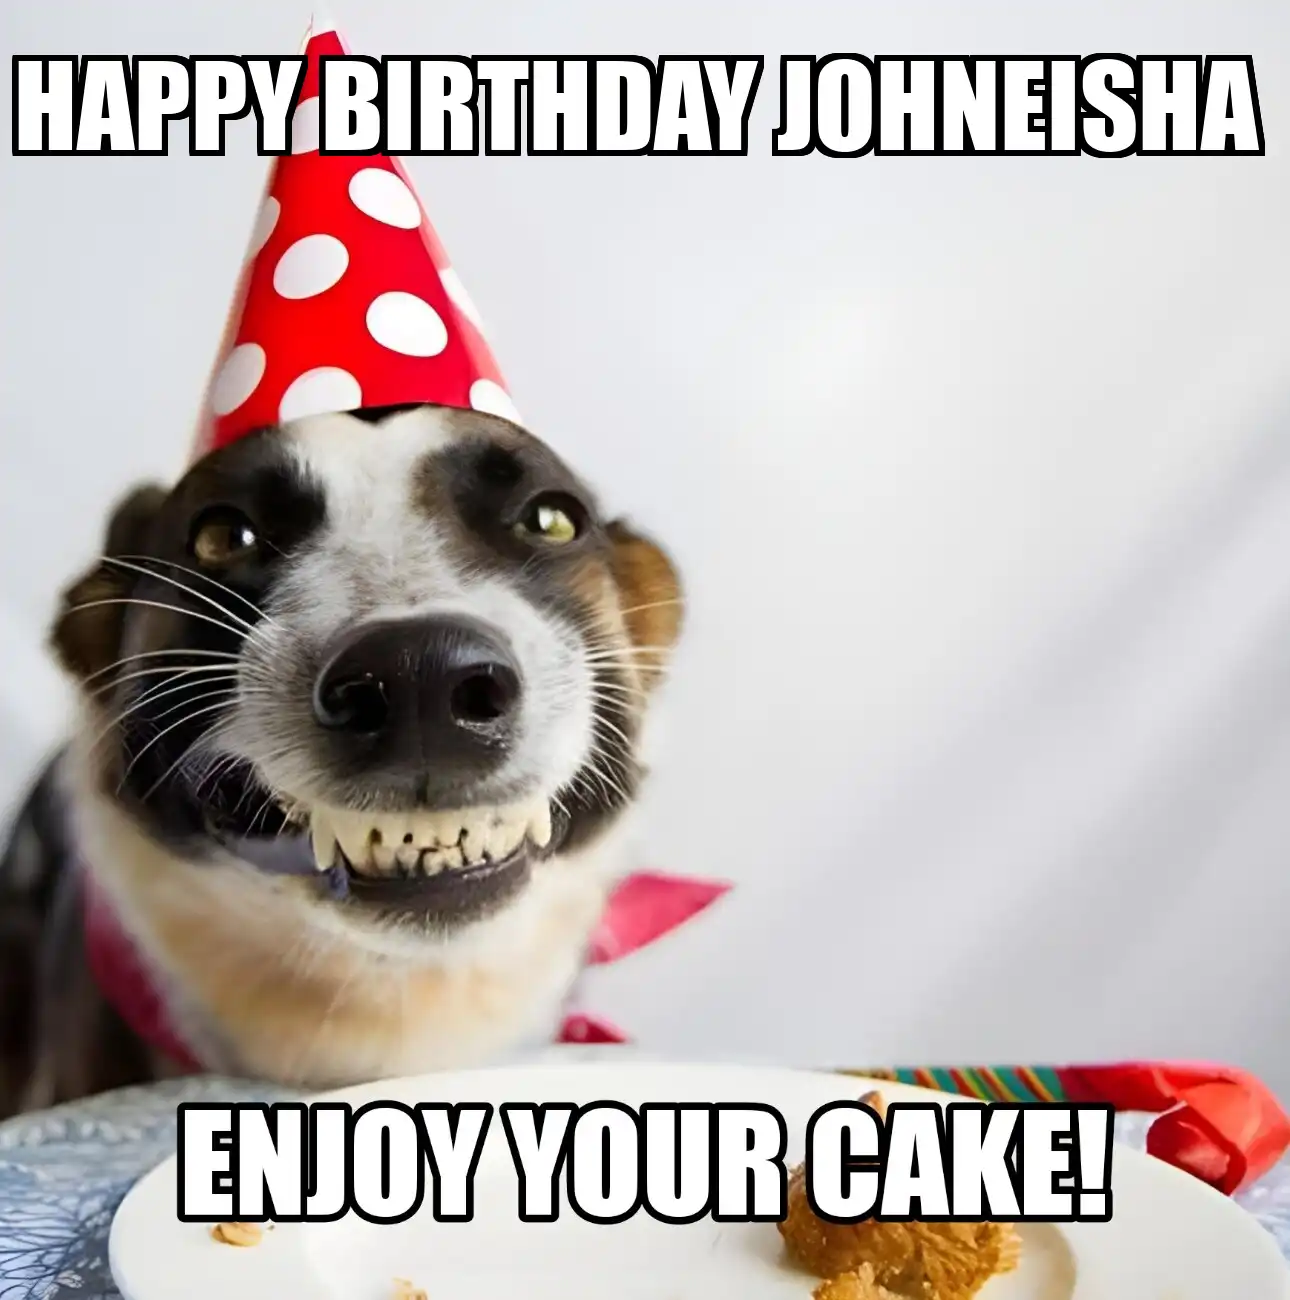 Happy Birthday Johneisha Enjoy Your Cake Dog Meme